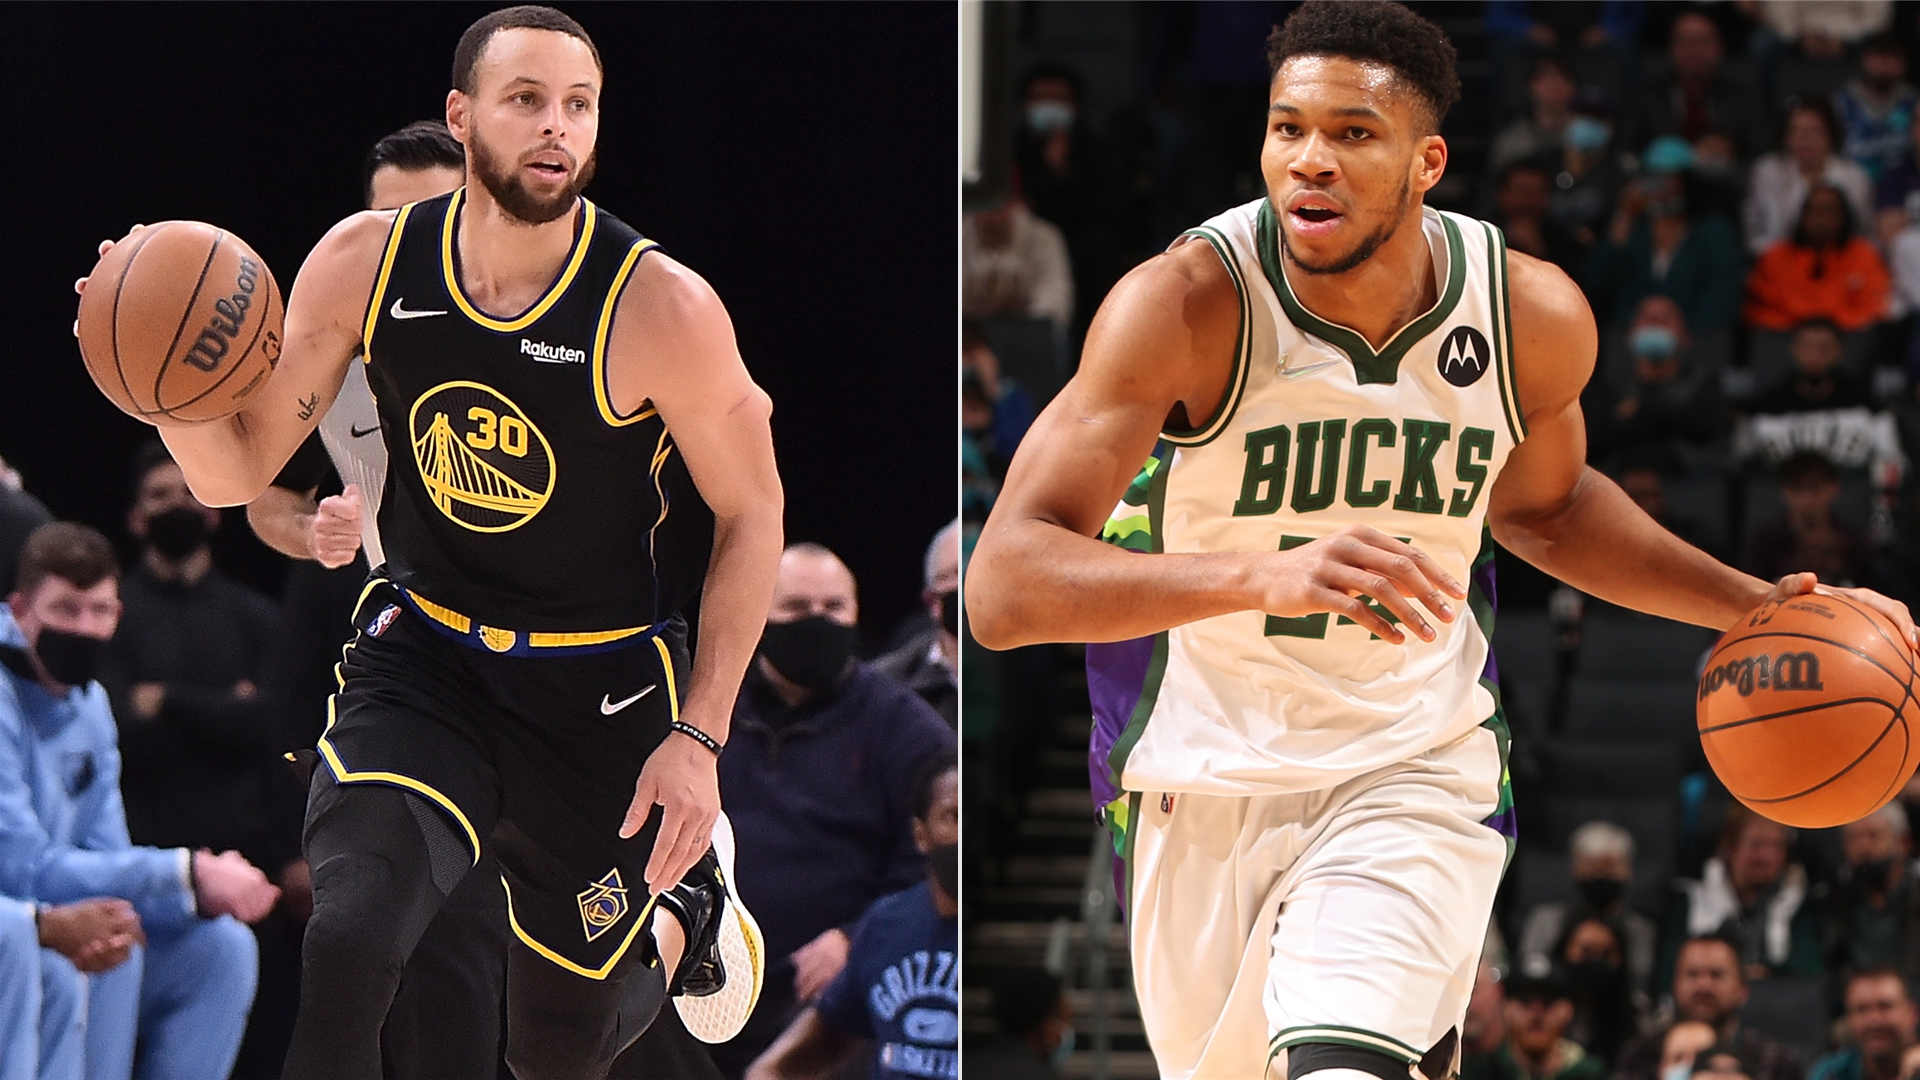 Bucks vs Warriors live score, updates, highlights from Thursday's NBA 2022 game